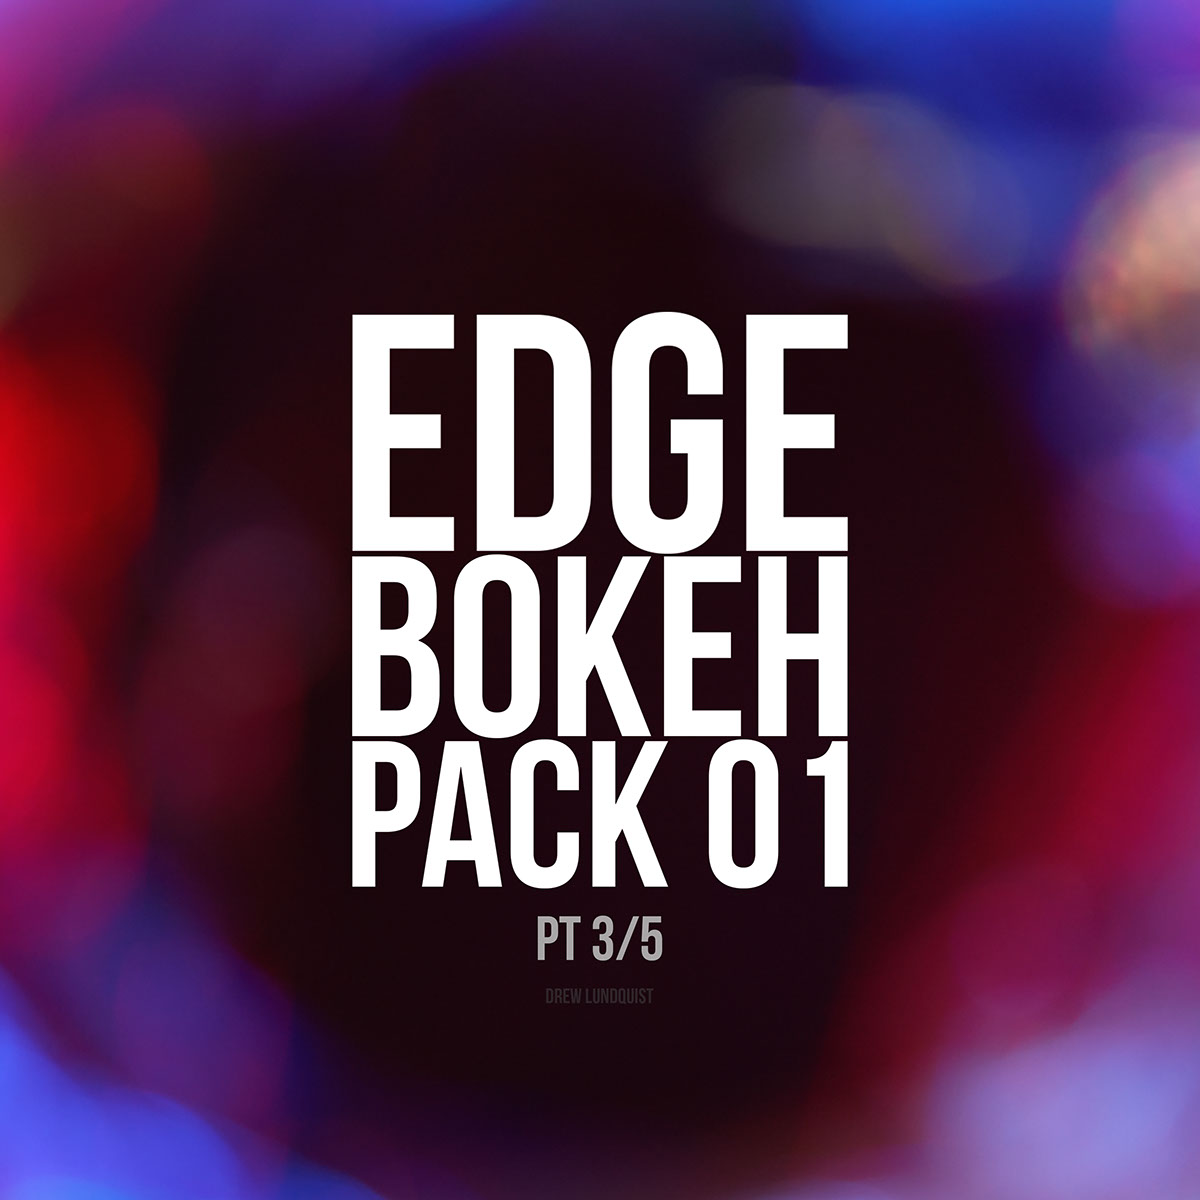 Edge Bokeh Pack 01 - Pt3 rendition image